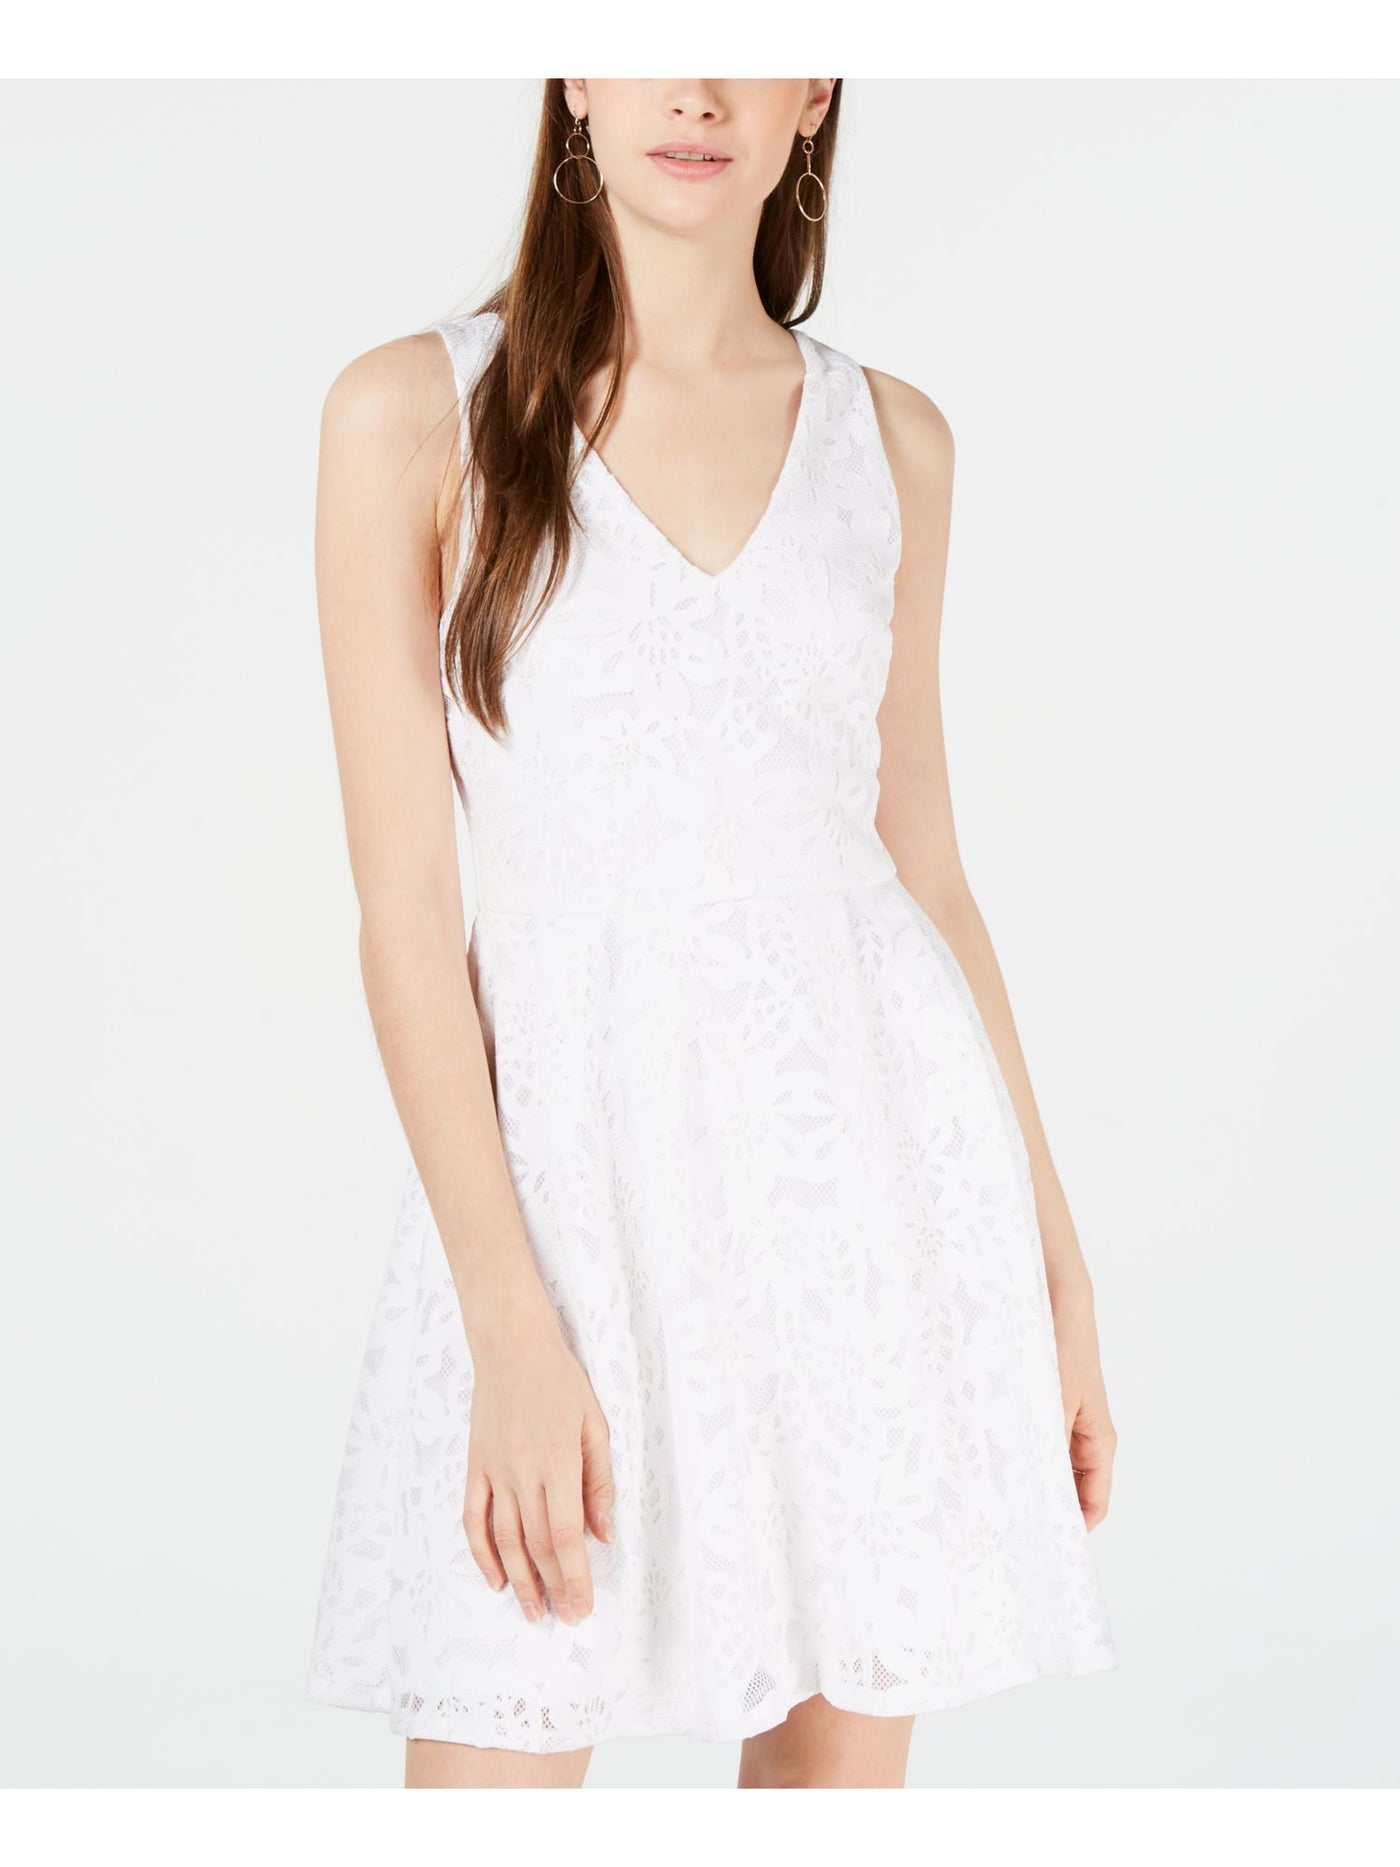 CRYSTAL DOLLS Womens White Lace Sleeveless V Neck Short Fit + Flare Dress Juniors 9